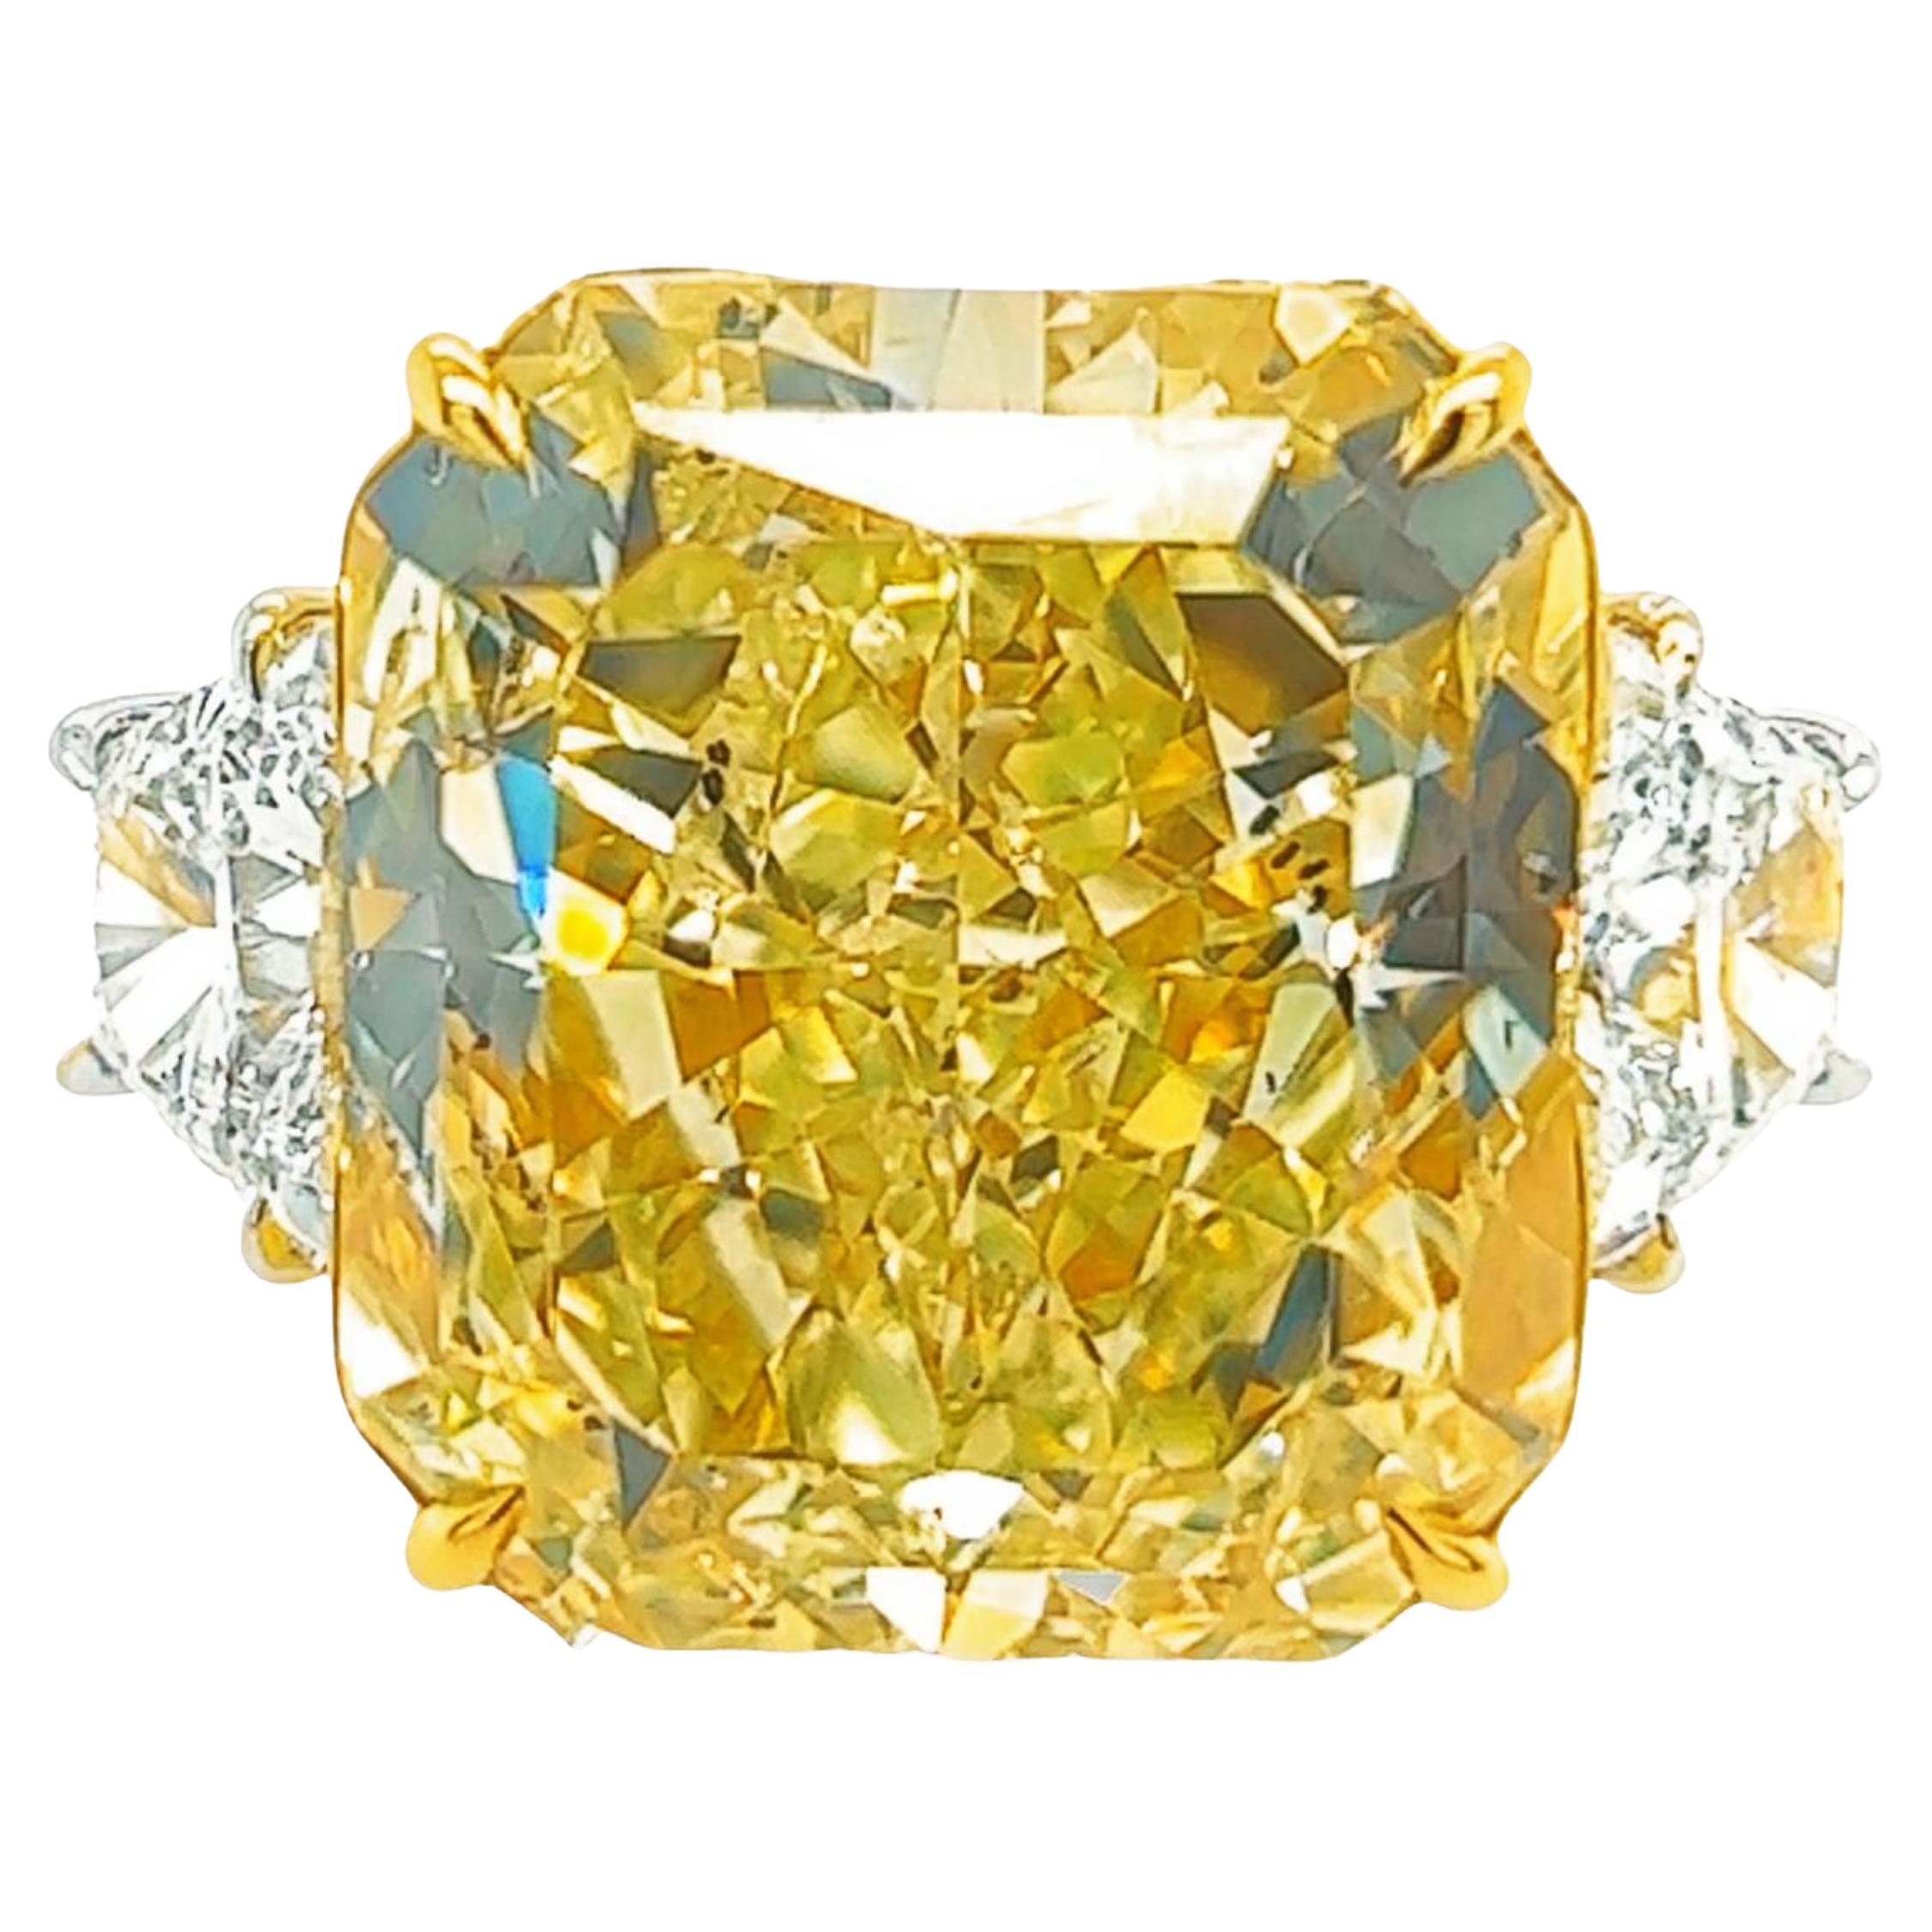 Verlobungsring mit 32,01 Karat strahlendem gelbem GIA-Diamant